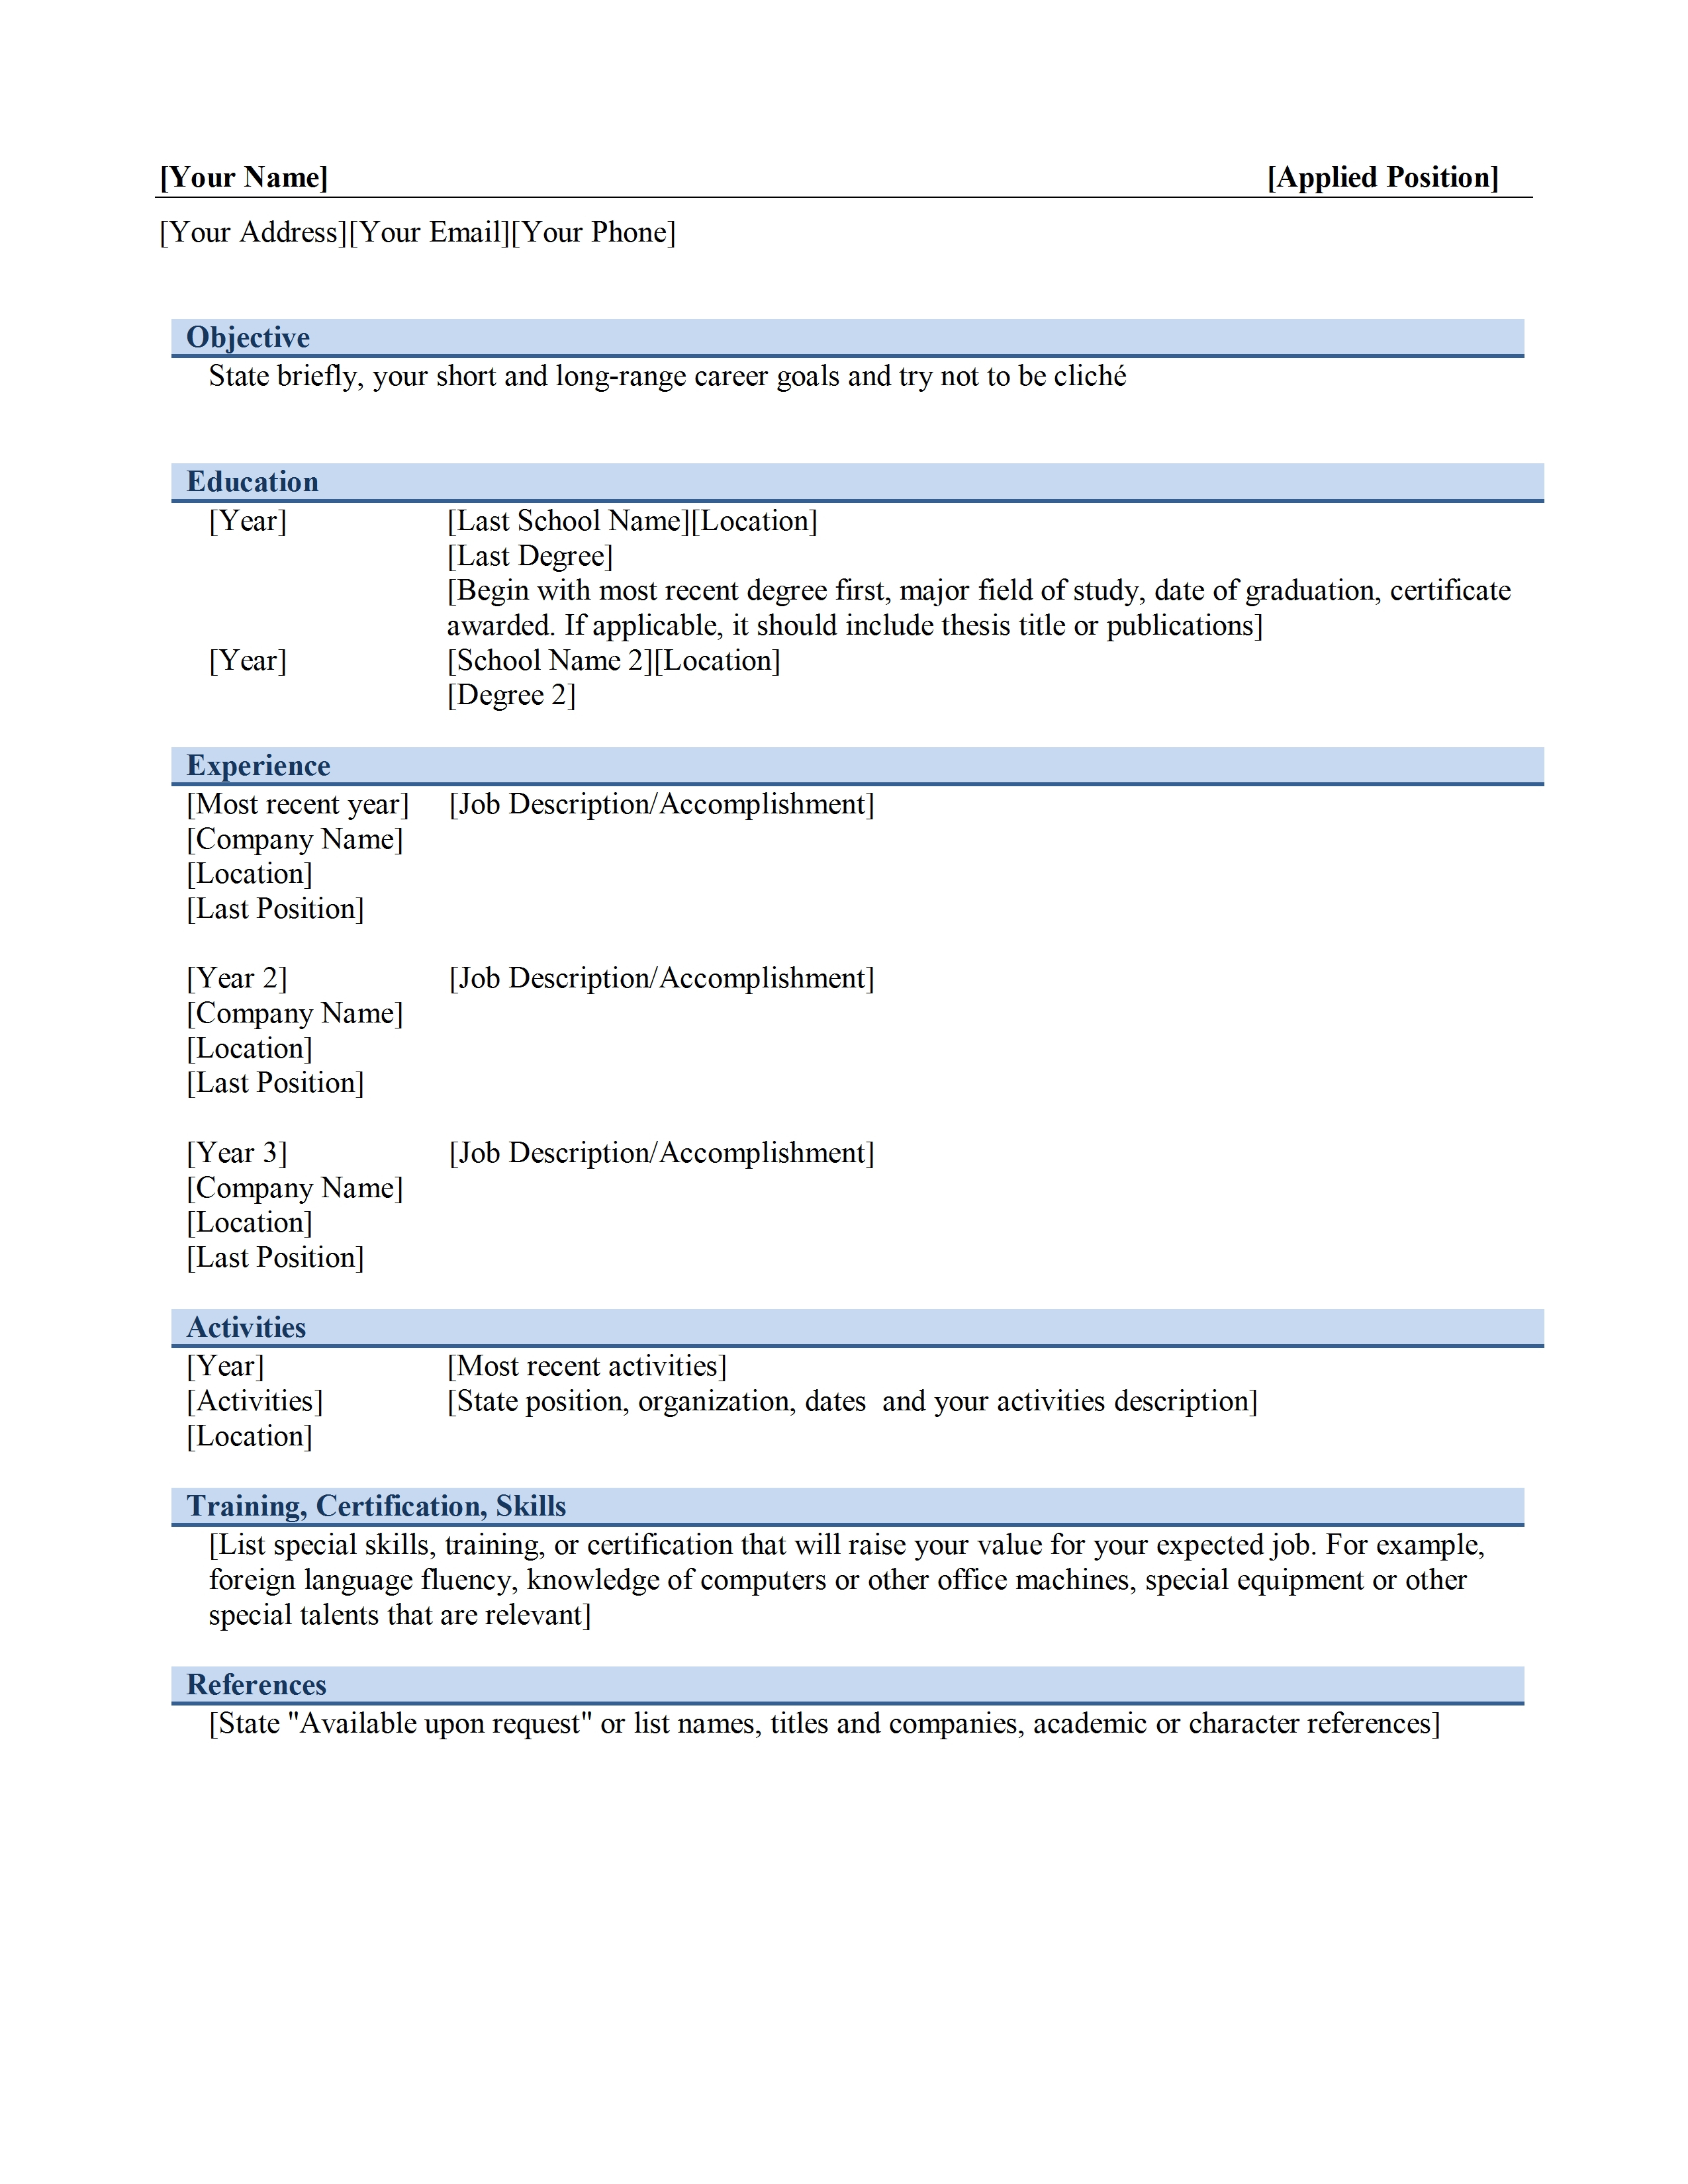 Sample Resume Ms Word Resume Template John Smith Resume Regarding Free Basic Resume Templates Microsoft Word